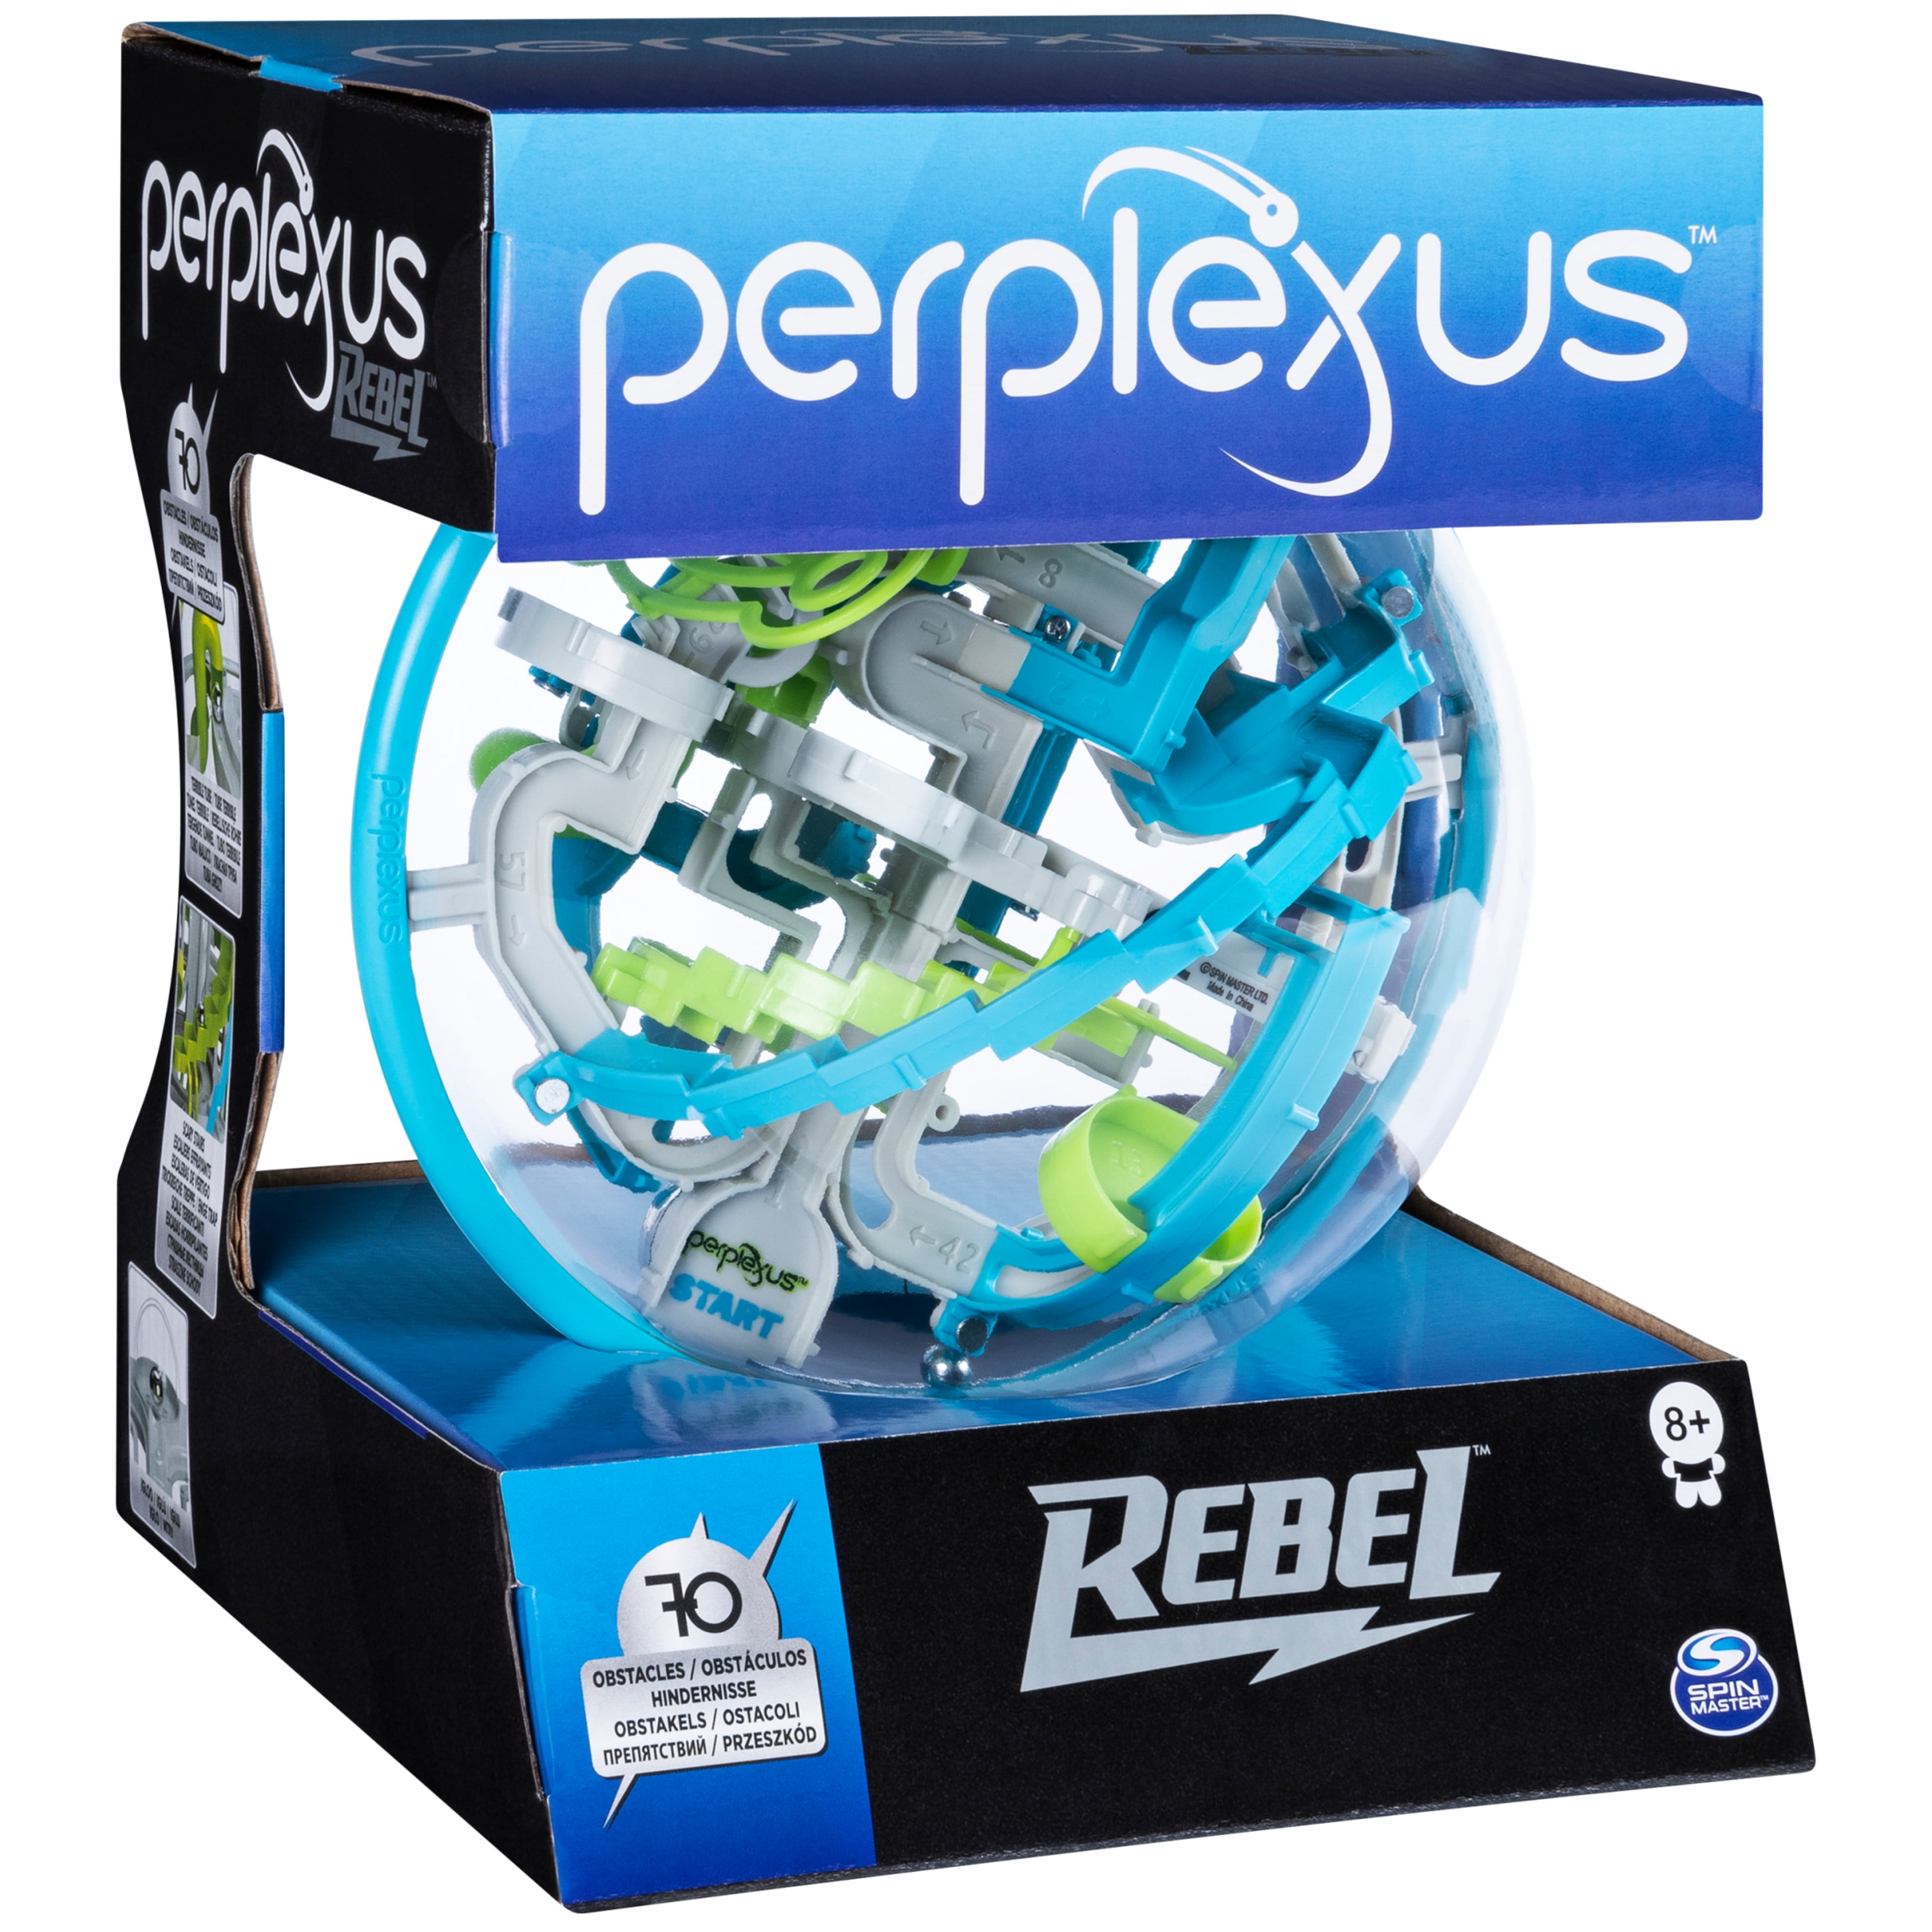 Perplexus Rebel - Cheeky Monkey Toys